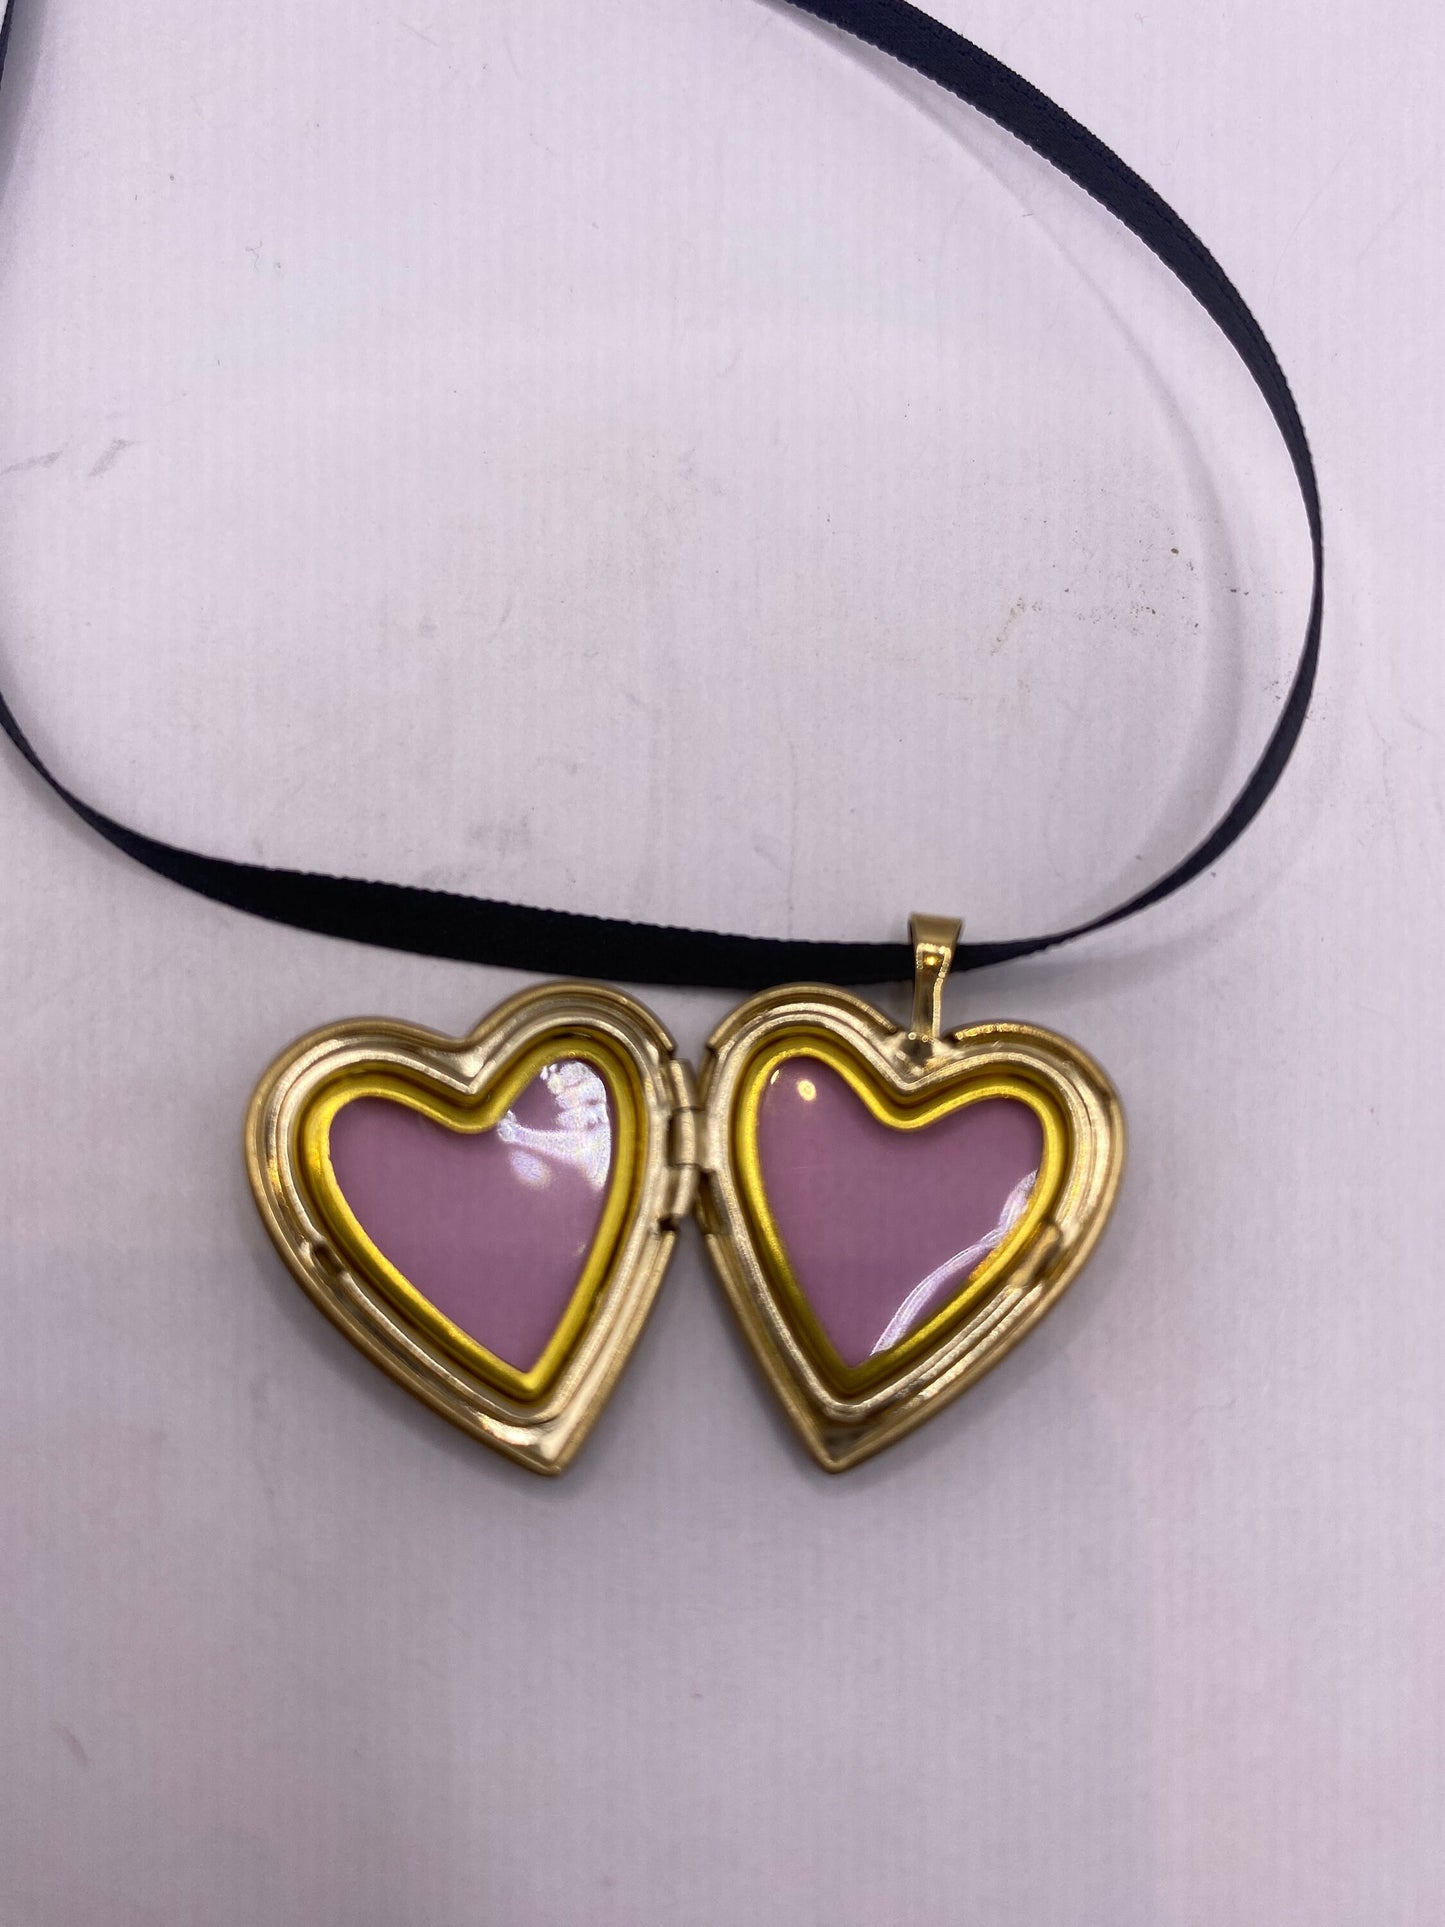 Vintage Gold Locket | Tiny Heart 9k Gold Filled Pendant Photo Memory Charm Engraved #1 Mom | Choker Necklace